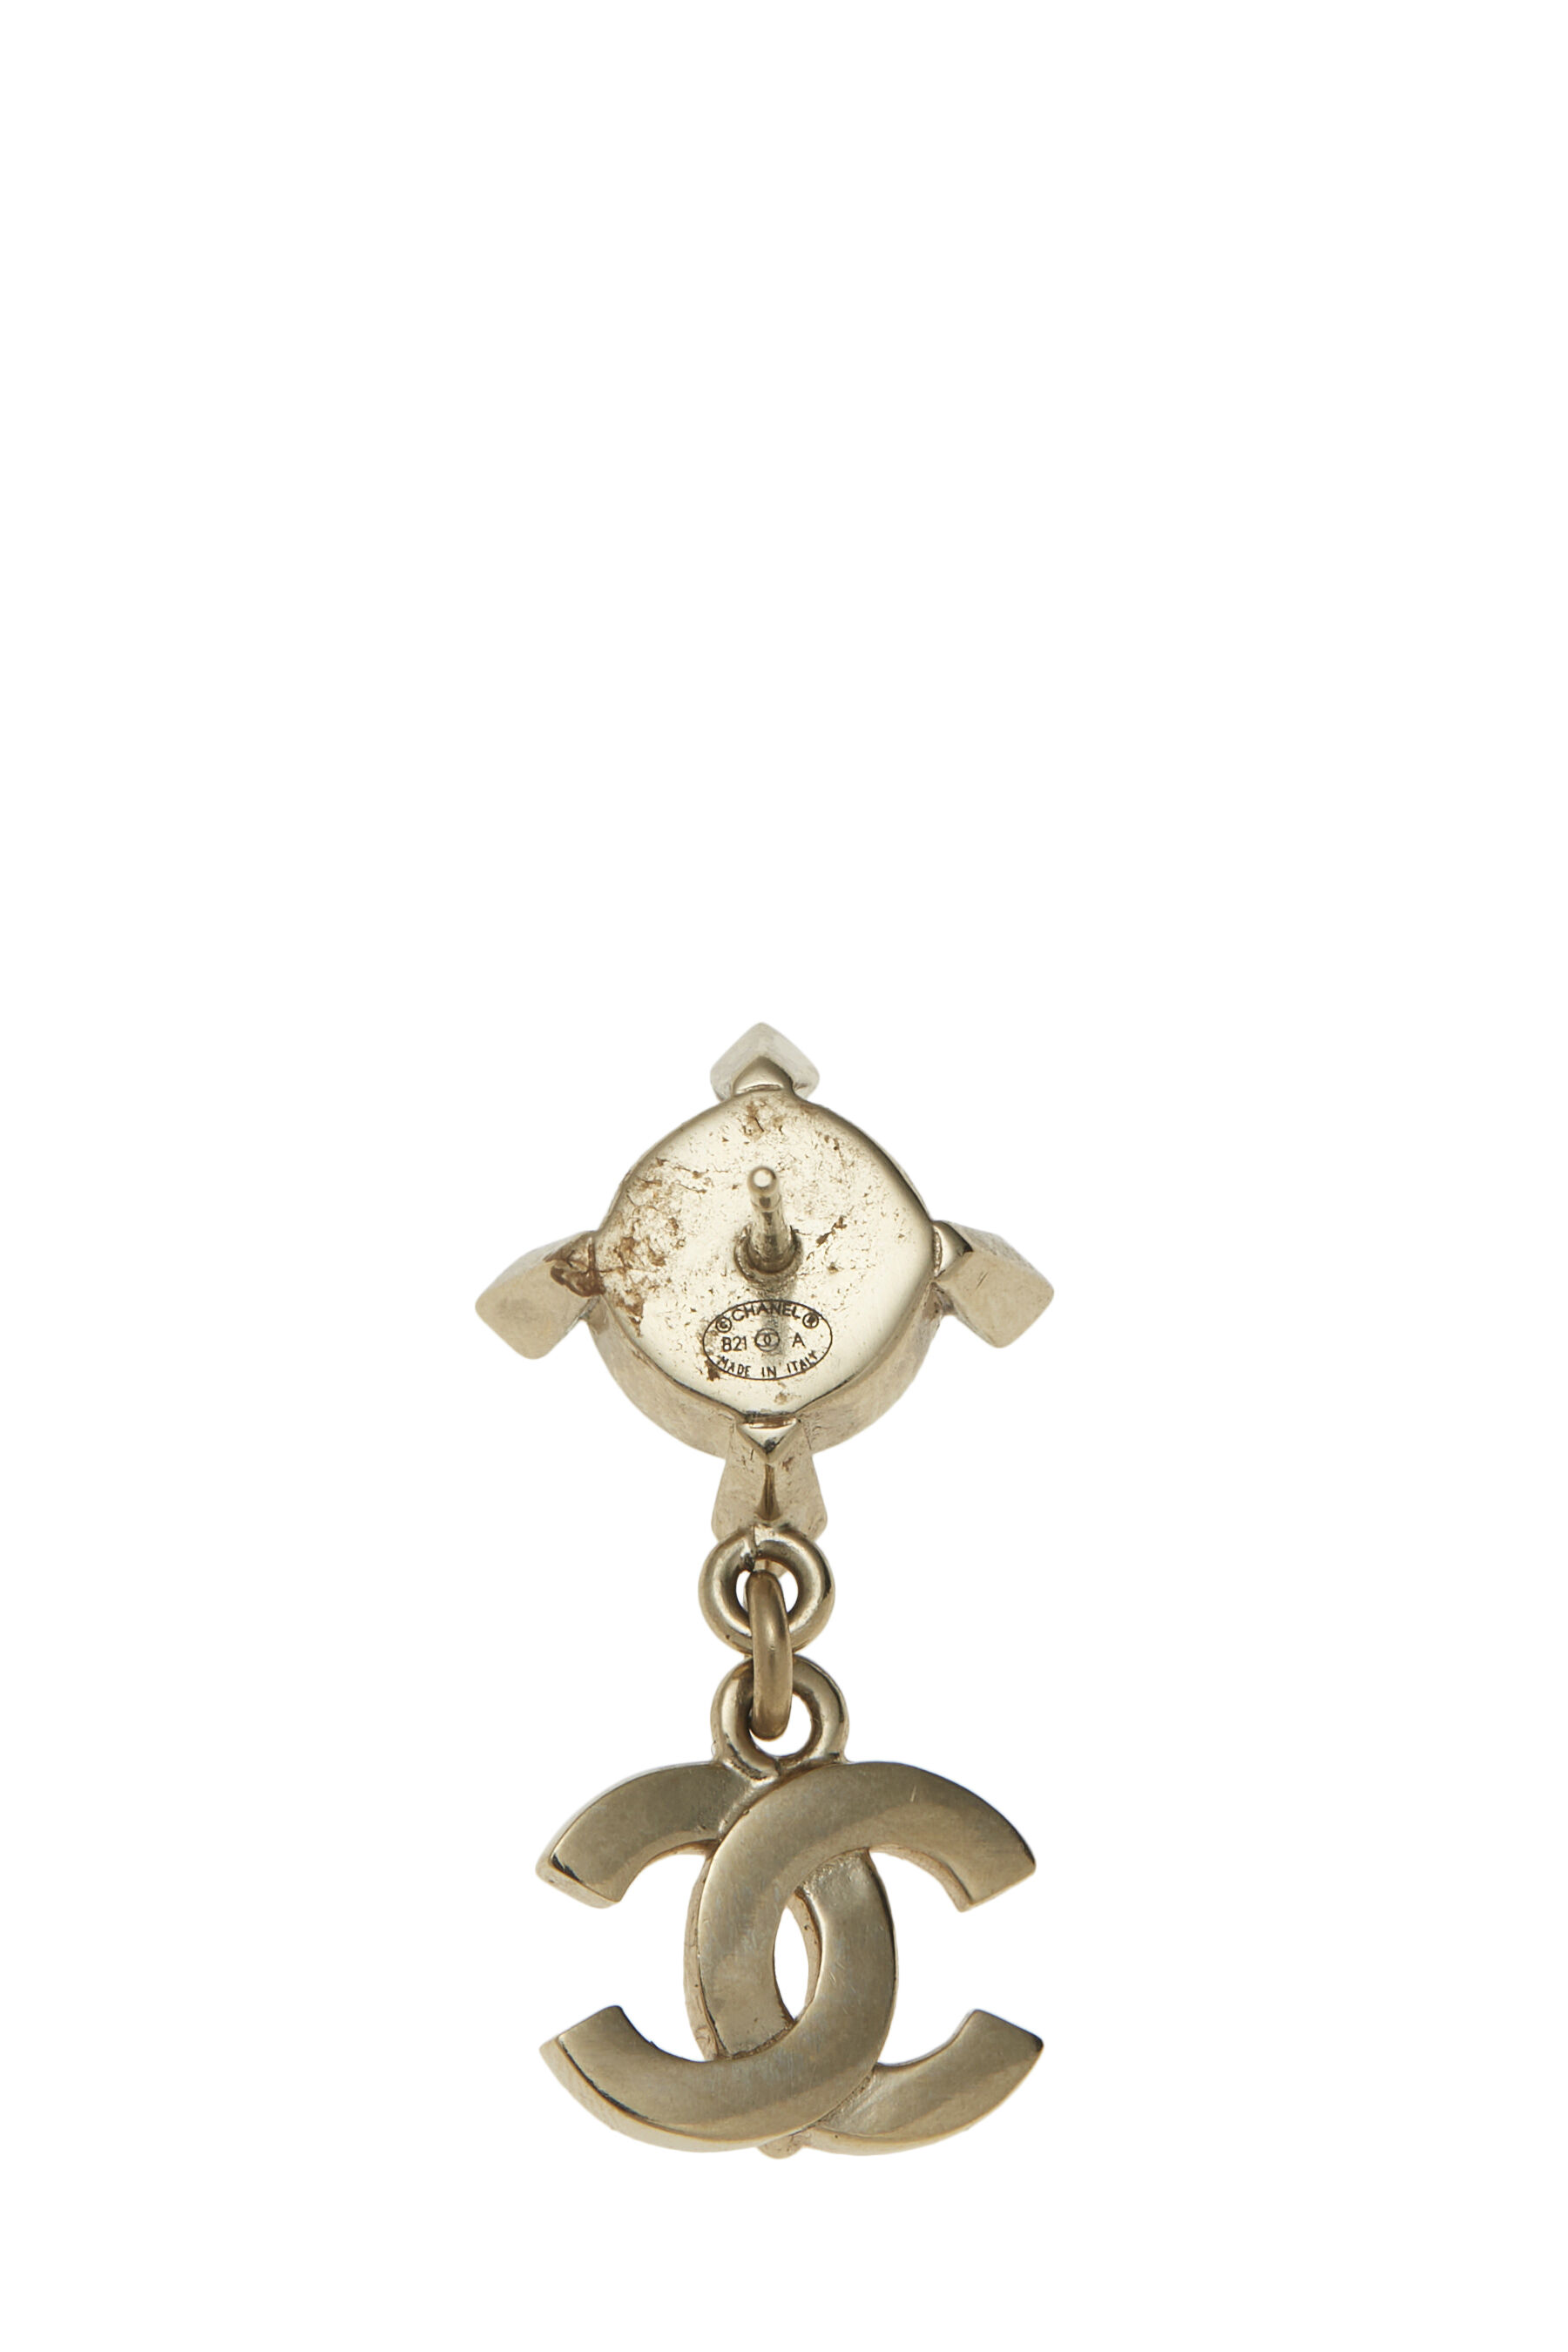 Chanel Gold & Faux Pearl Crystal 'CC' Dangle Earrings Q6J1YY0RDB003